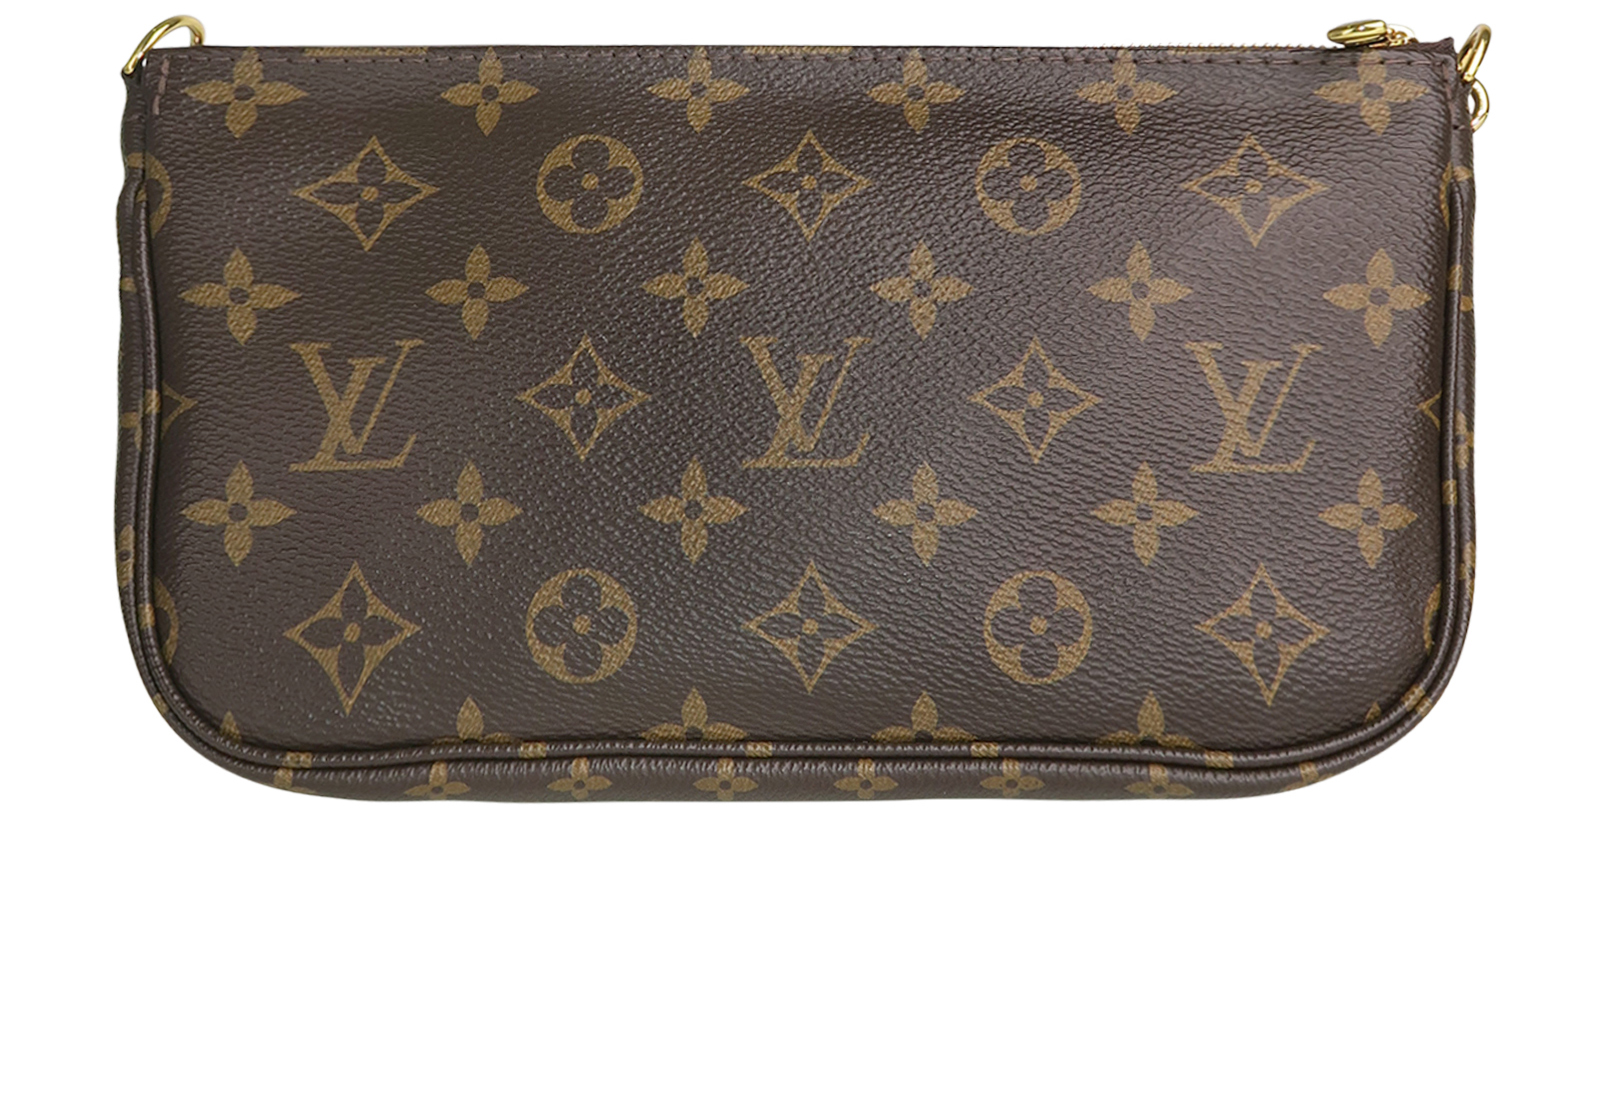 Louis Vuitton - Authenticated Multi Pochette Accessoires Handbag - Leather Black for Women, Very Good Condition